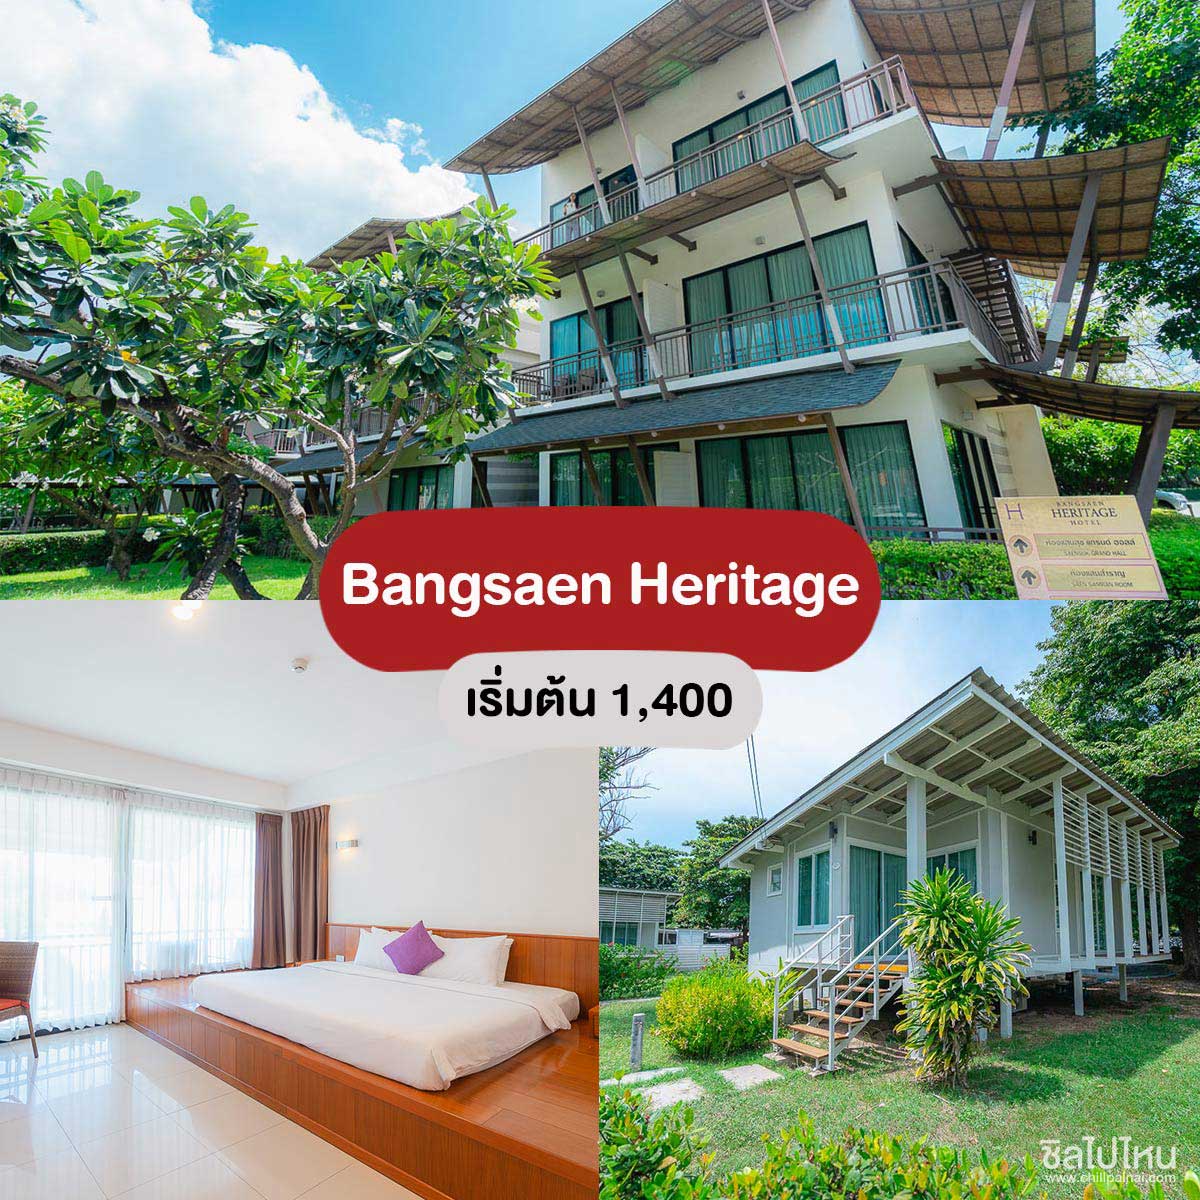 Bangsaen Heritage Hotel - ที่พักบางแสน บางเสร่ 